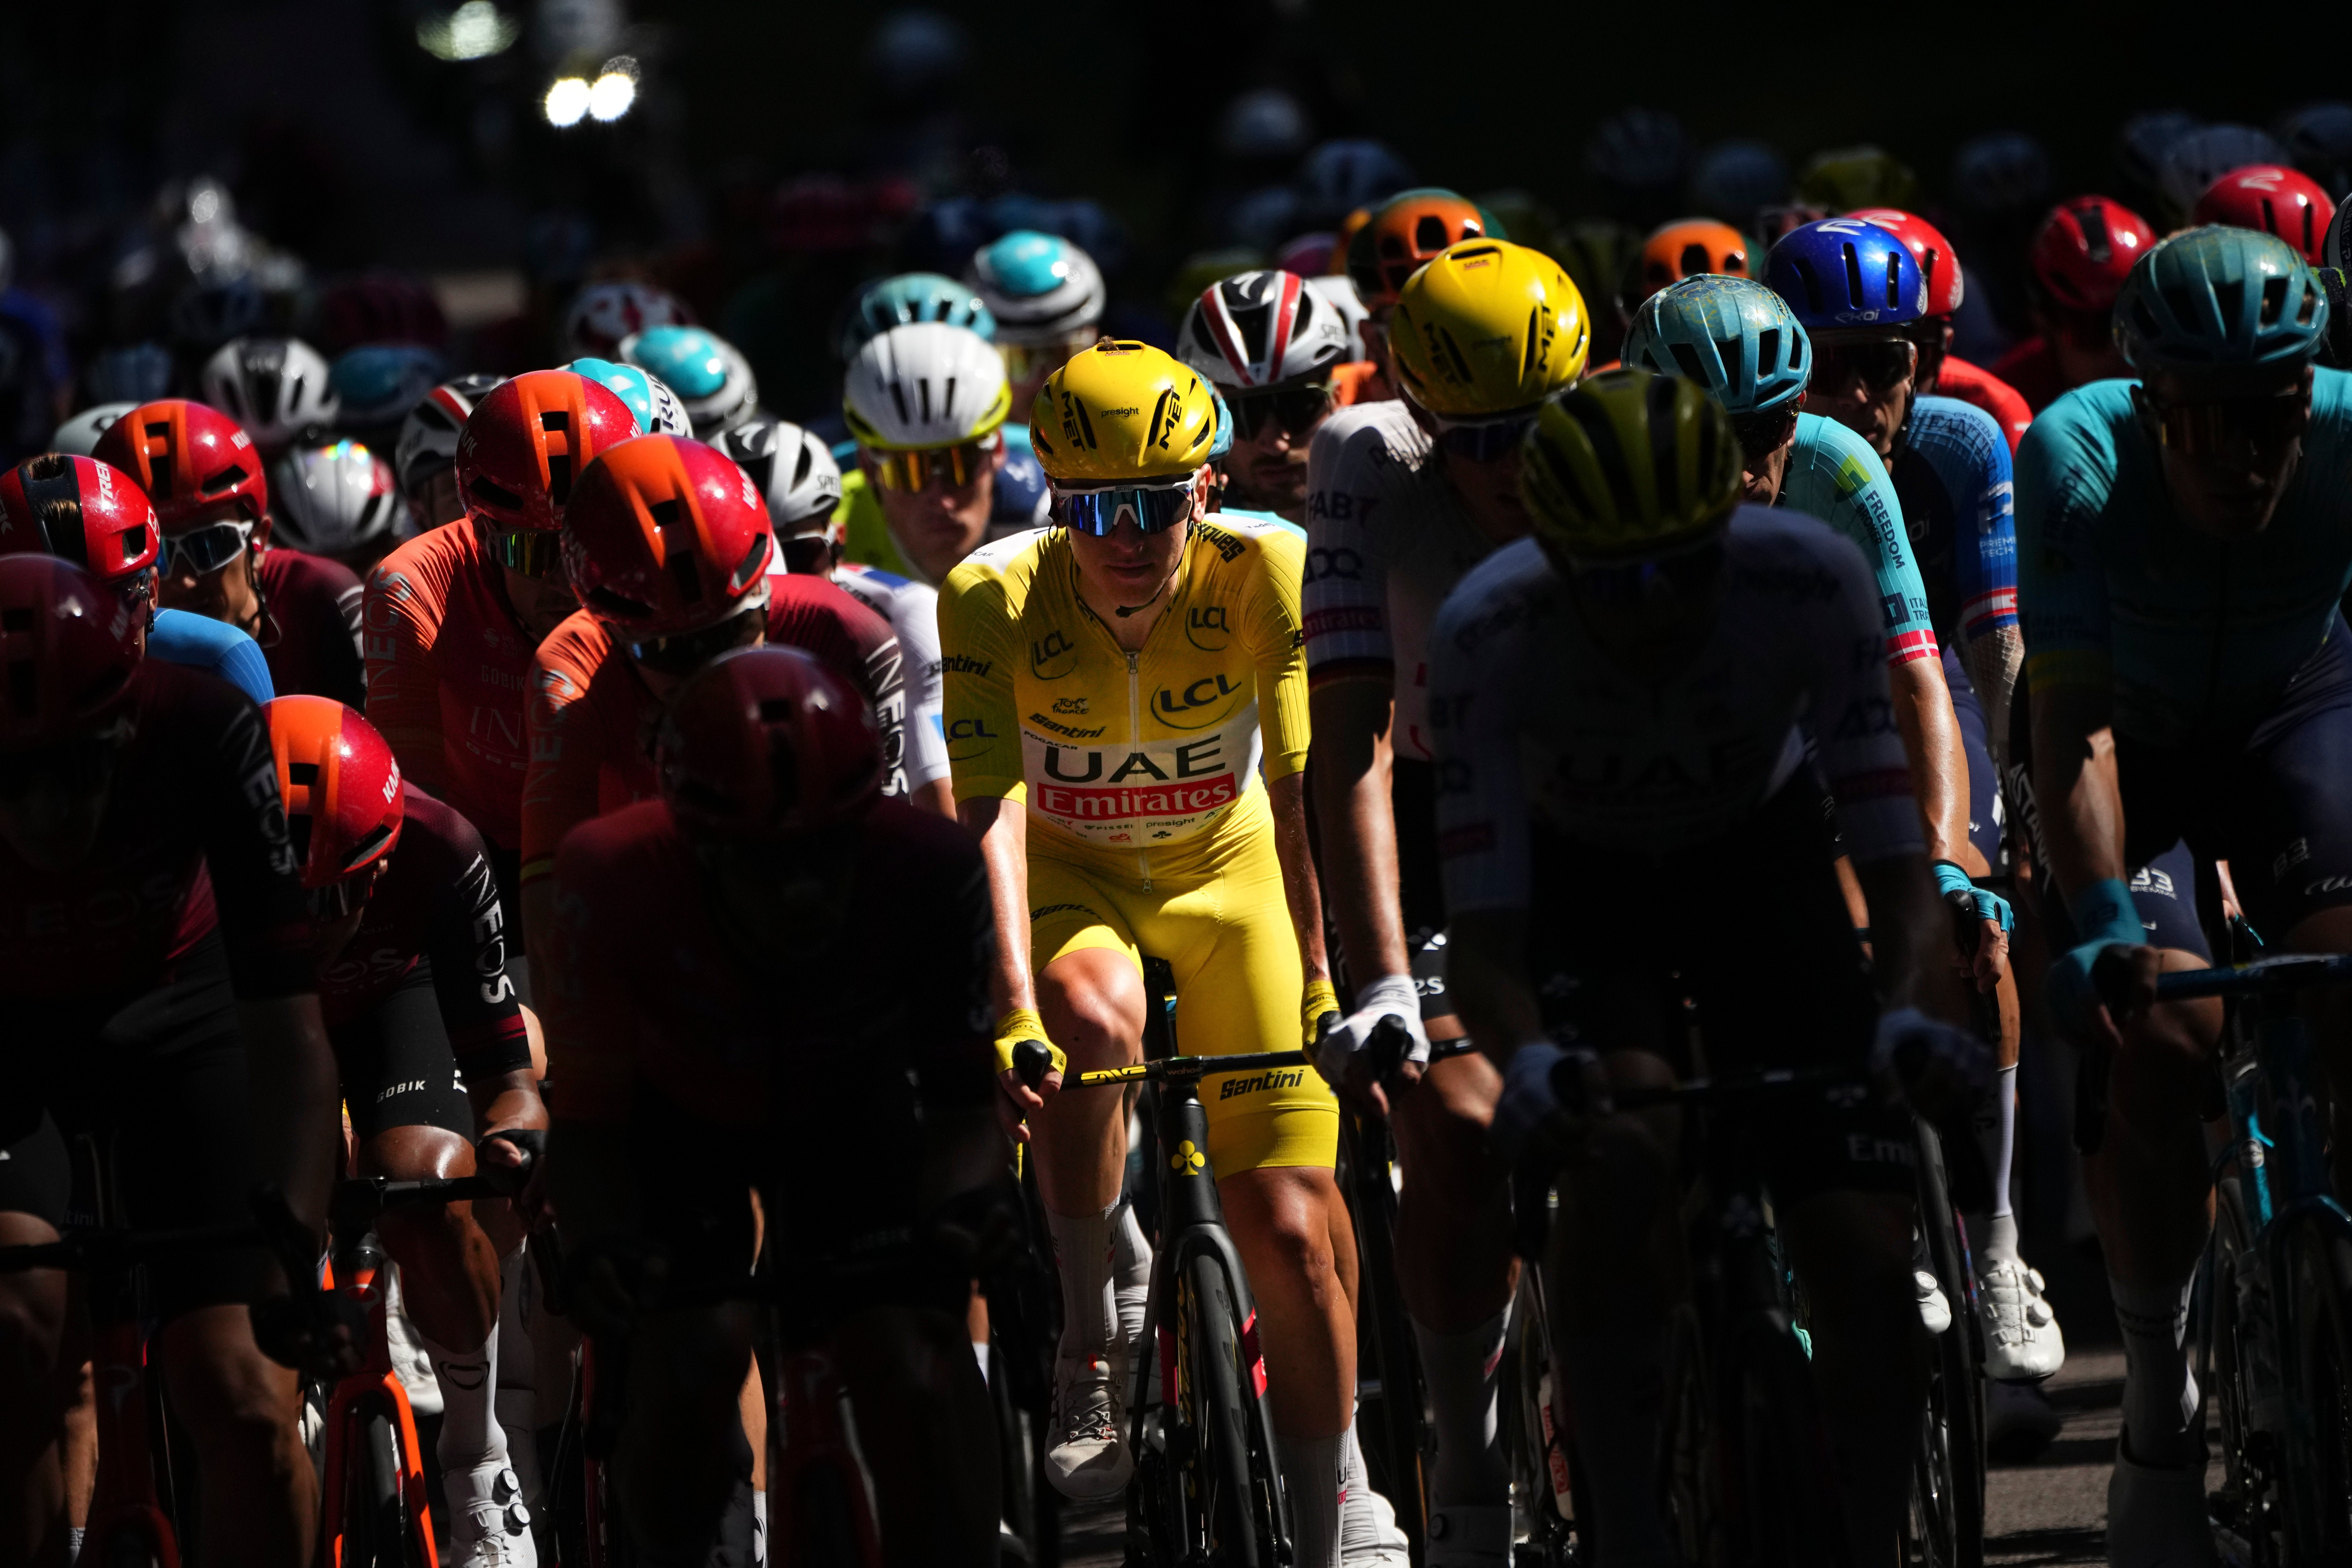 Tadej Pogacar kept his lead in the yellow jersey despite some worries in the crosswinds (Daniel Cole/AP)